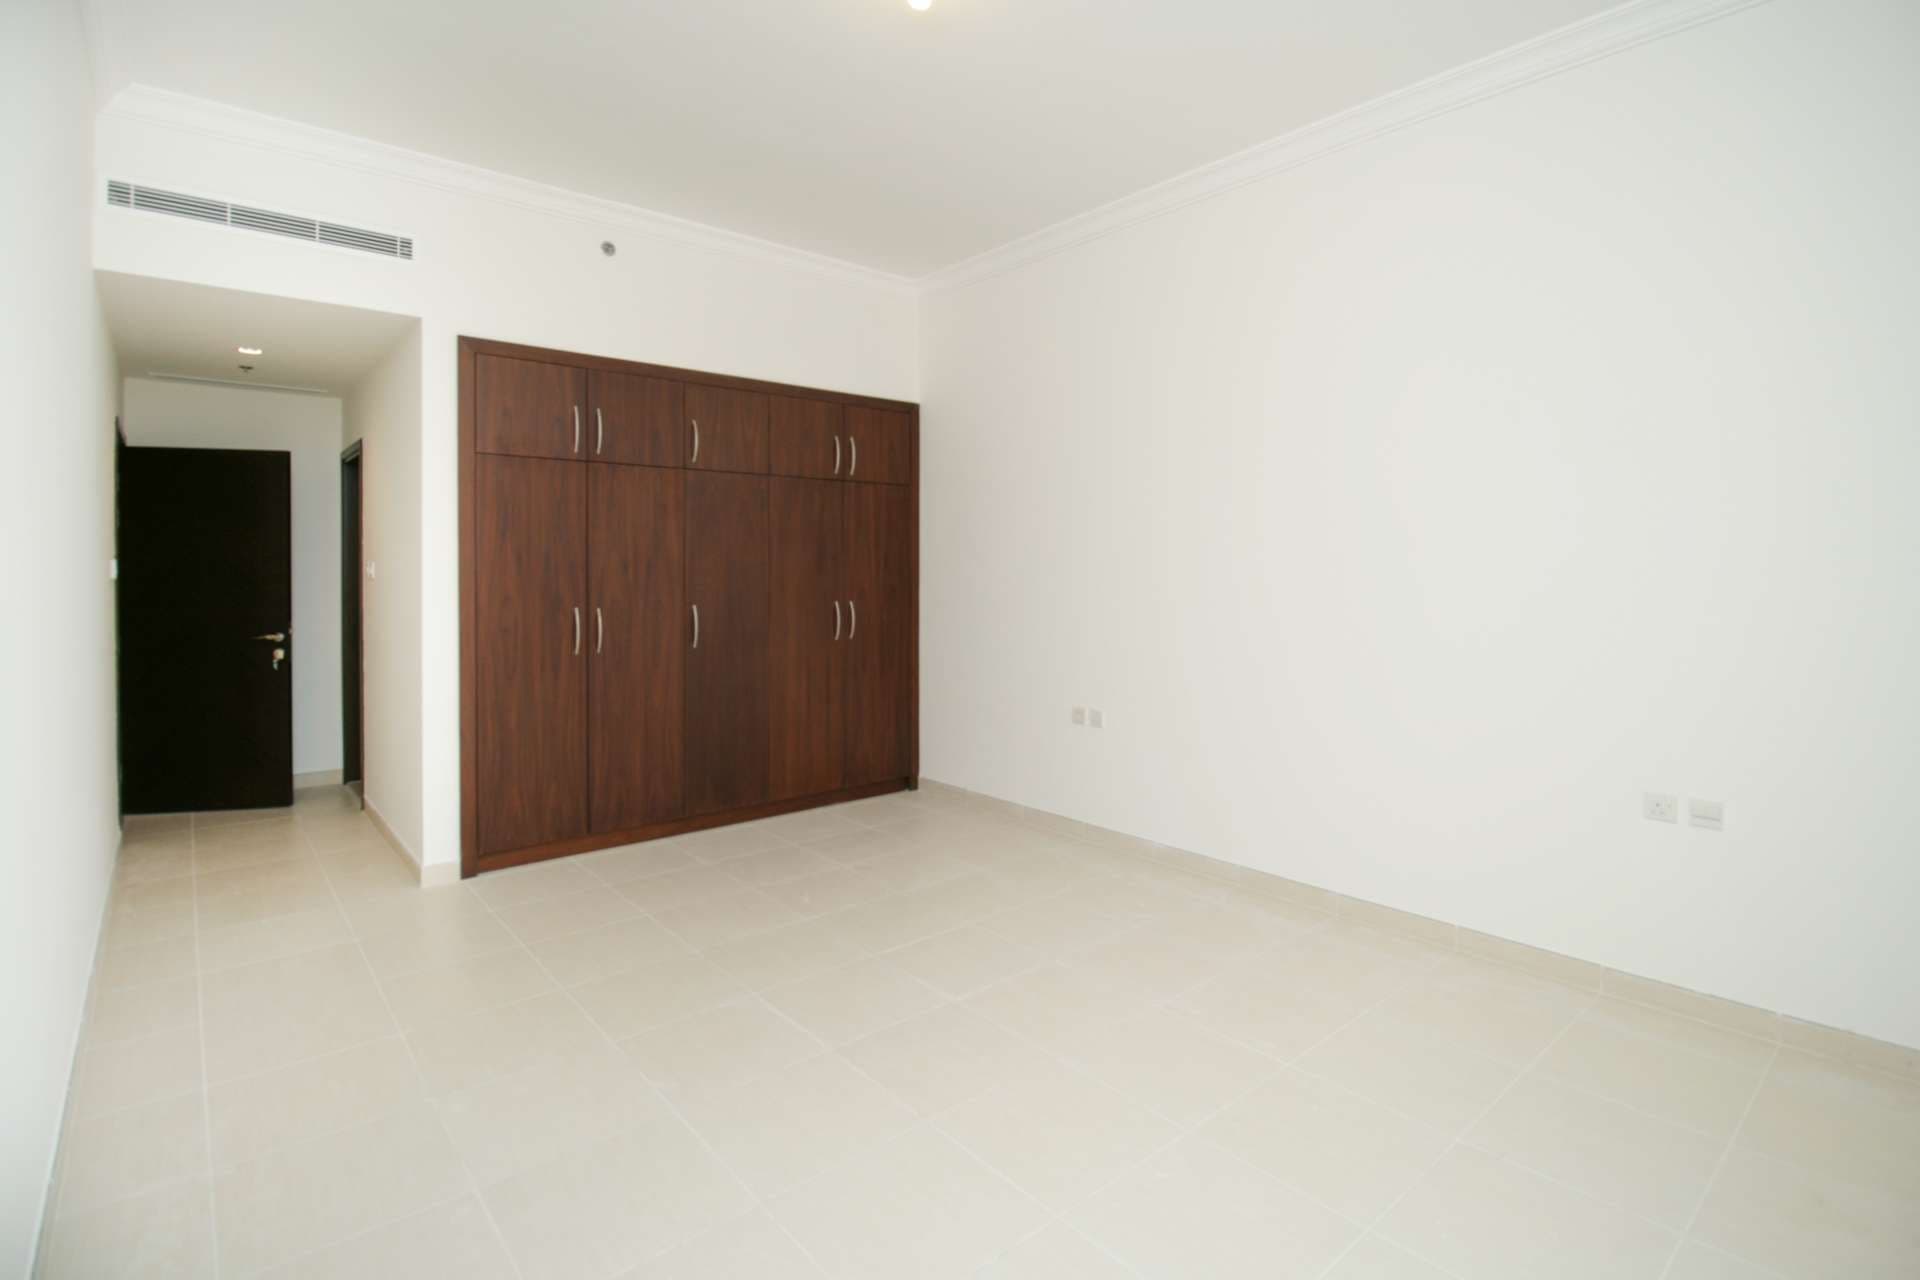 1 Bedroom Apartment For Sale Sarai Apartments Lp04848 27f4c1e5a3d26200.jpg